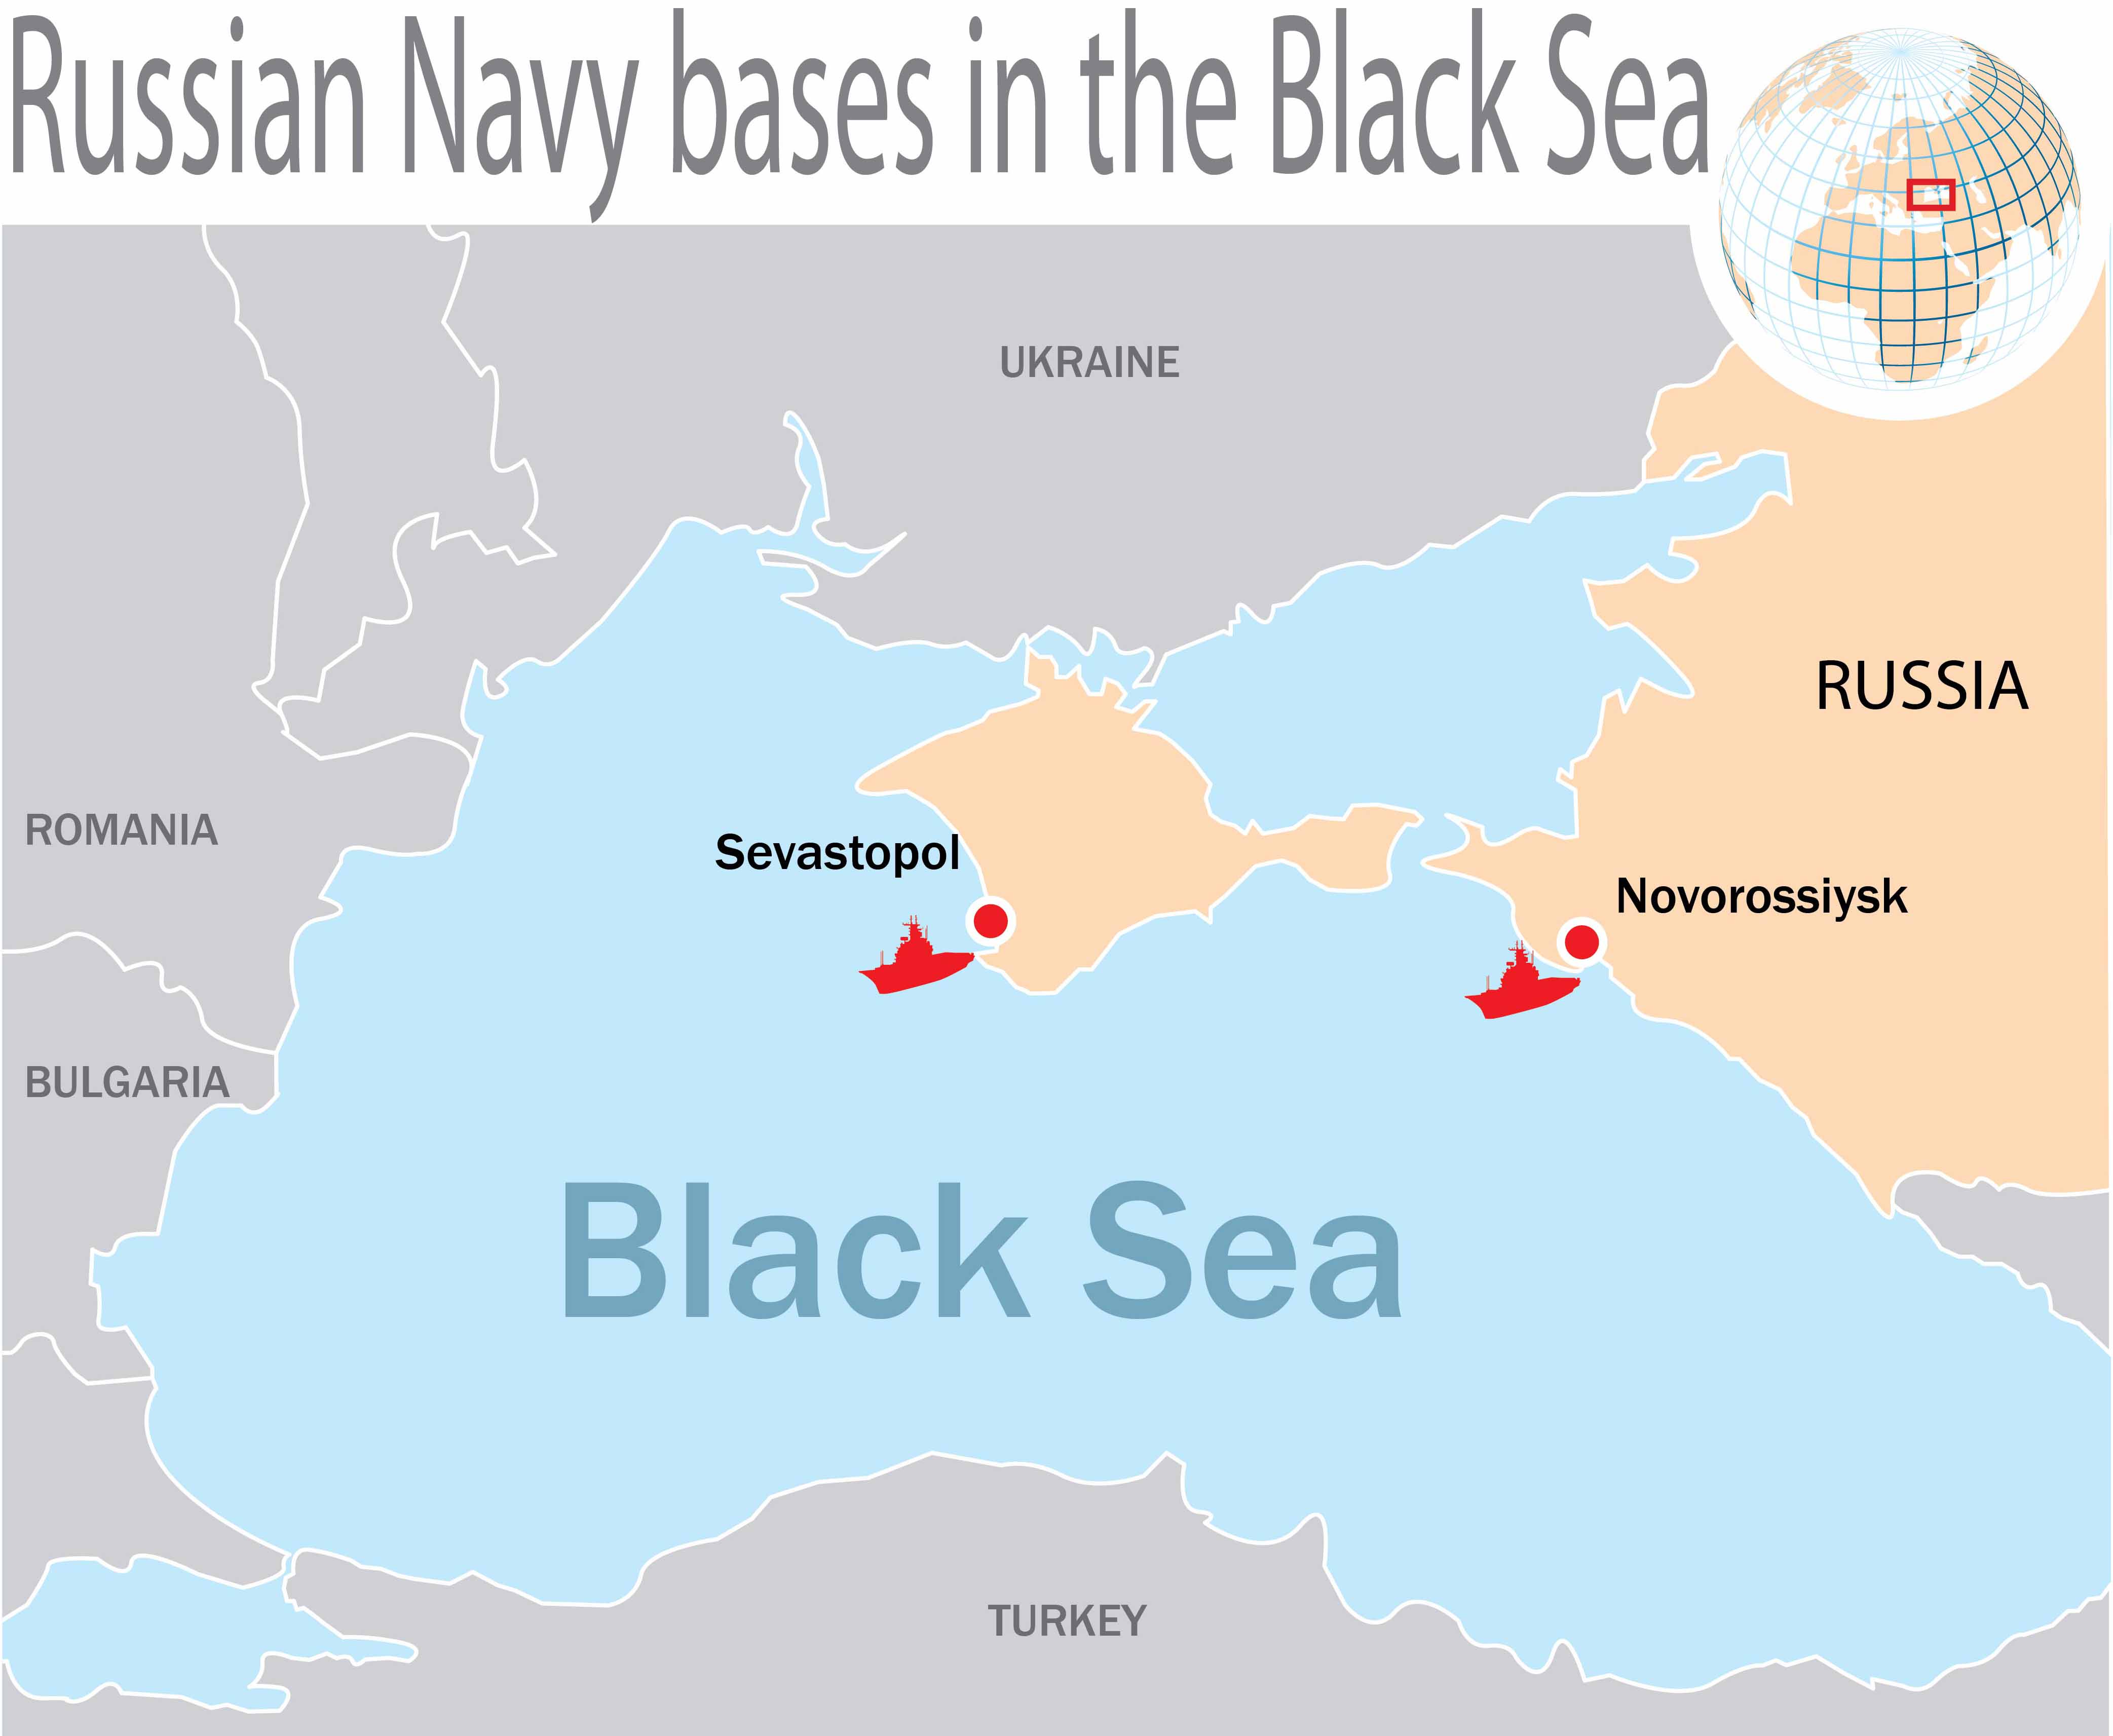 Russian naval bases on the Black Sea coast / Map by Nikolai Korolev